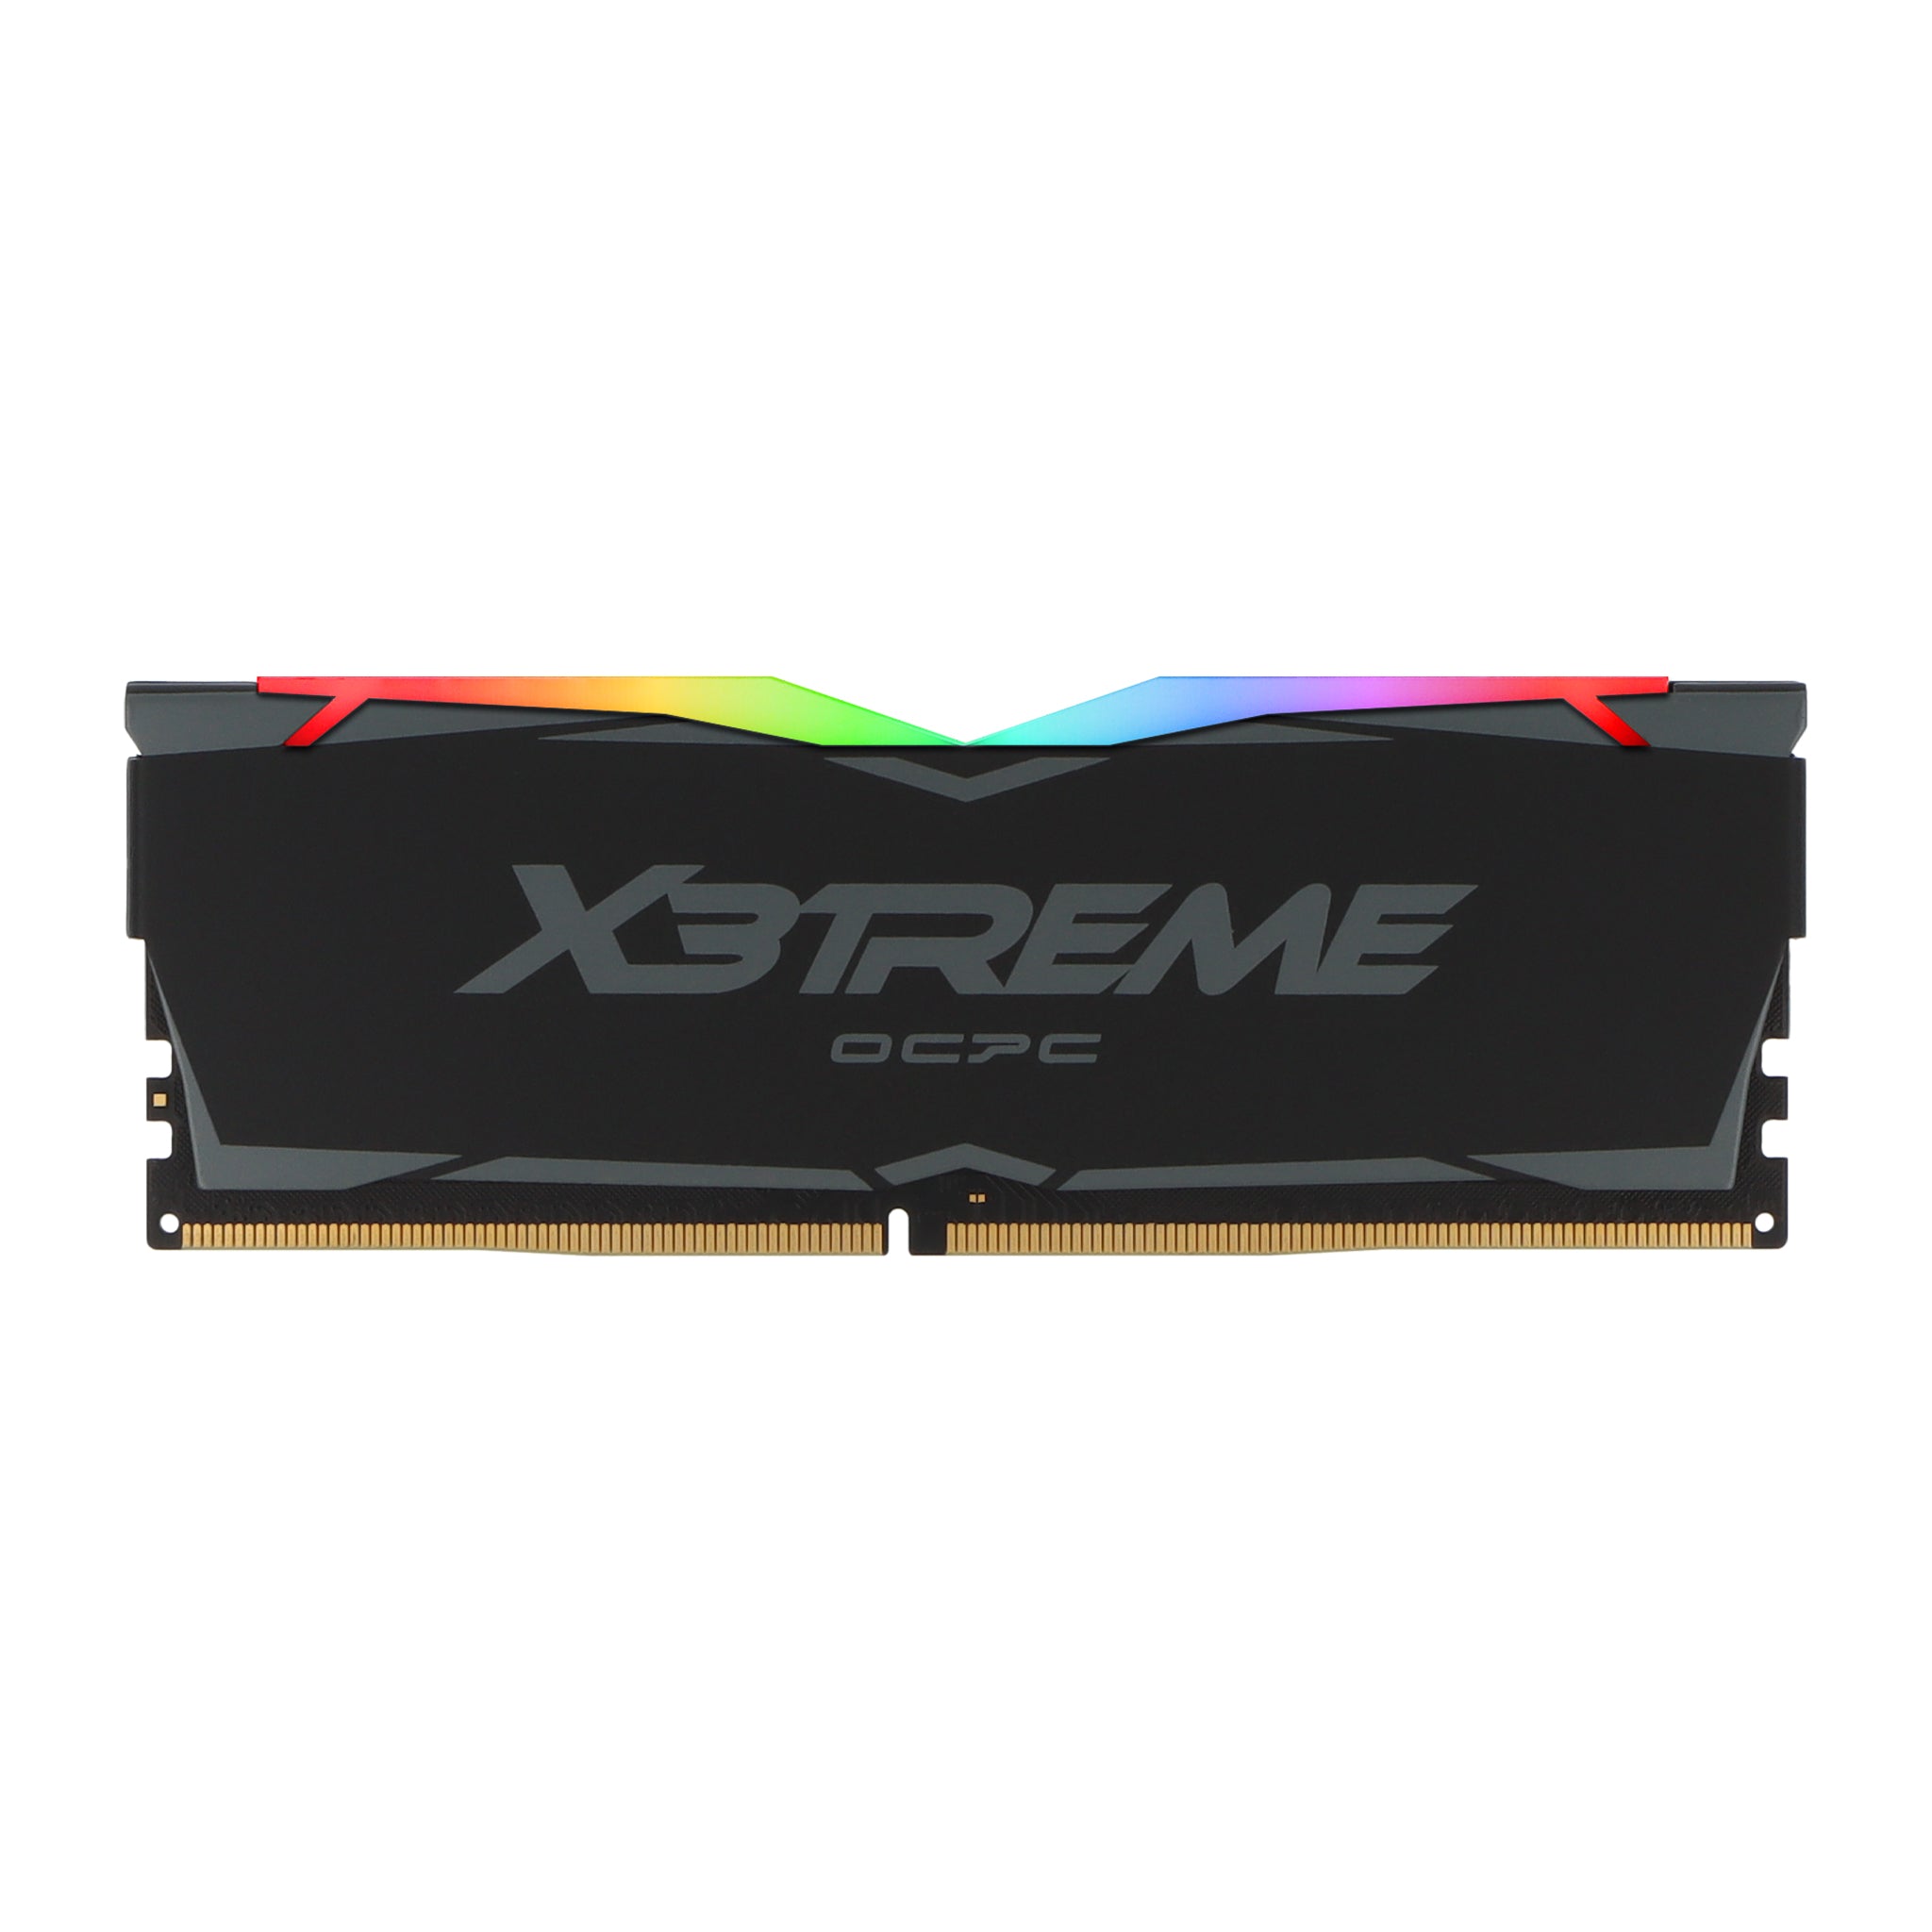 OCPC X3Treme Aura RGB DDR4 16GB Kit (2x8GB) - 3000MHz - CL16